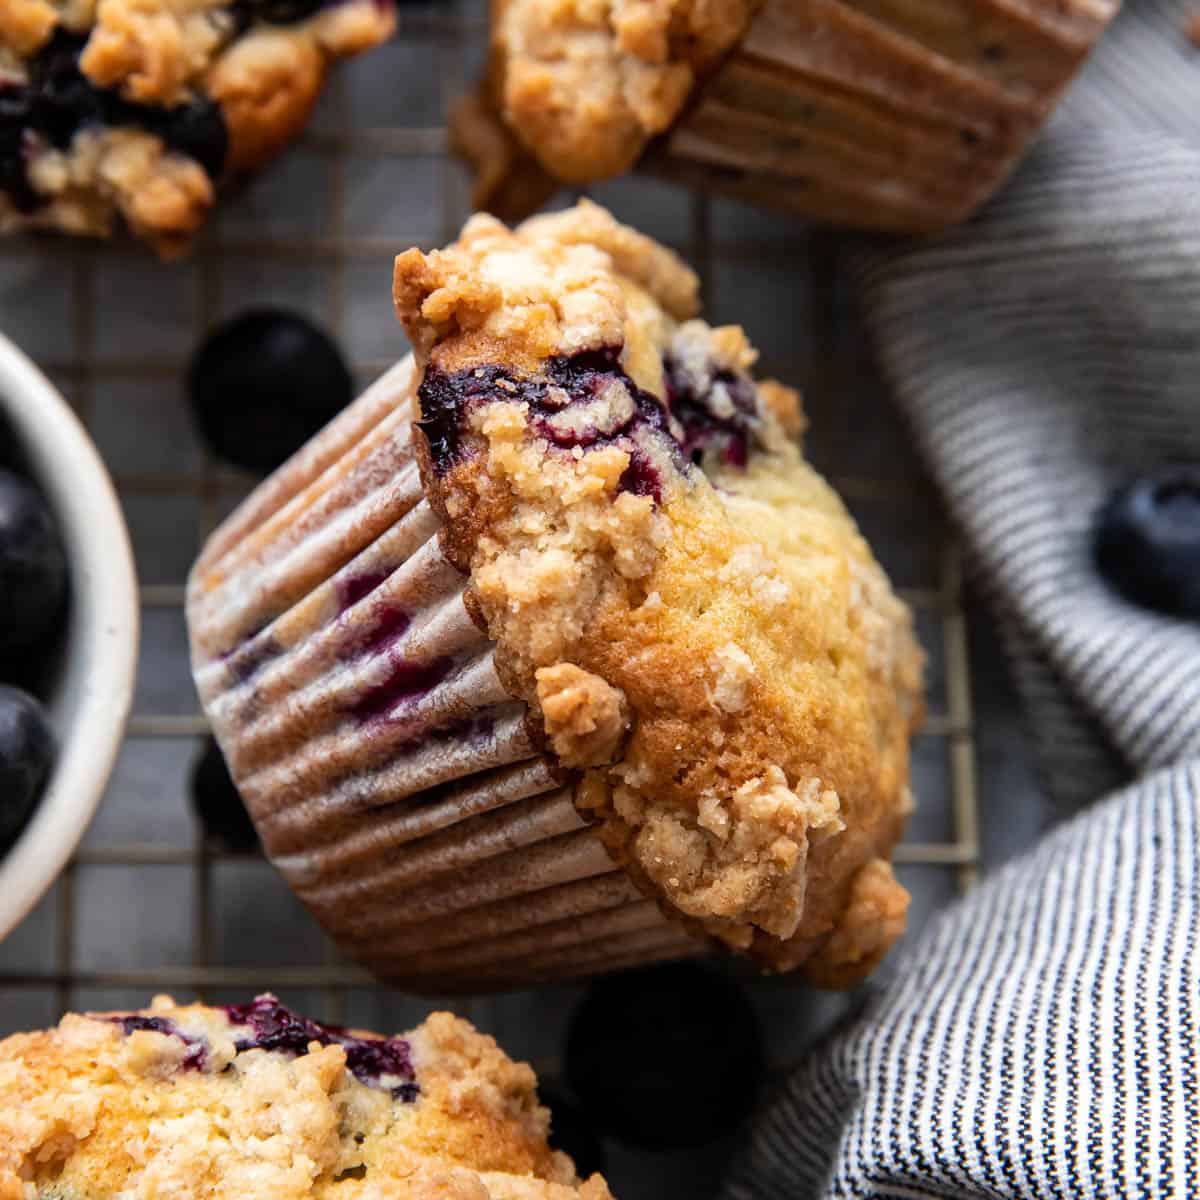 https://moderncrumb.com/wp-content/uploads/2021/07/blueberry-muffins-18.jpg